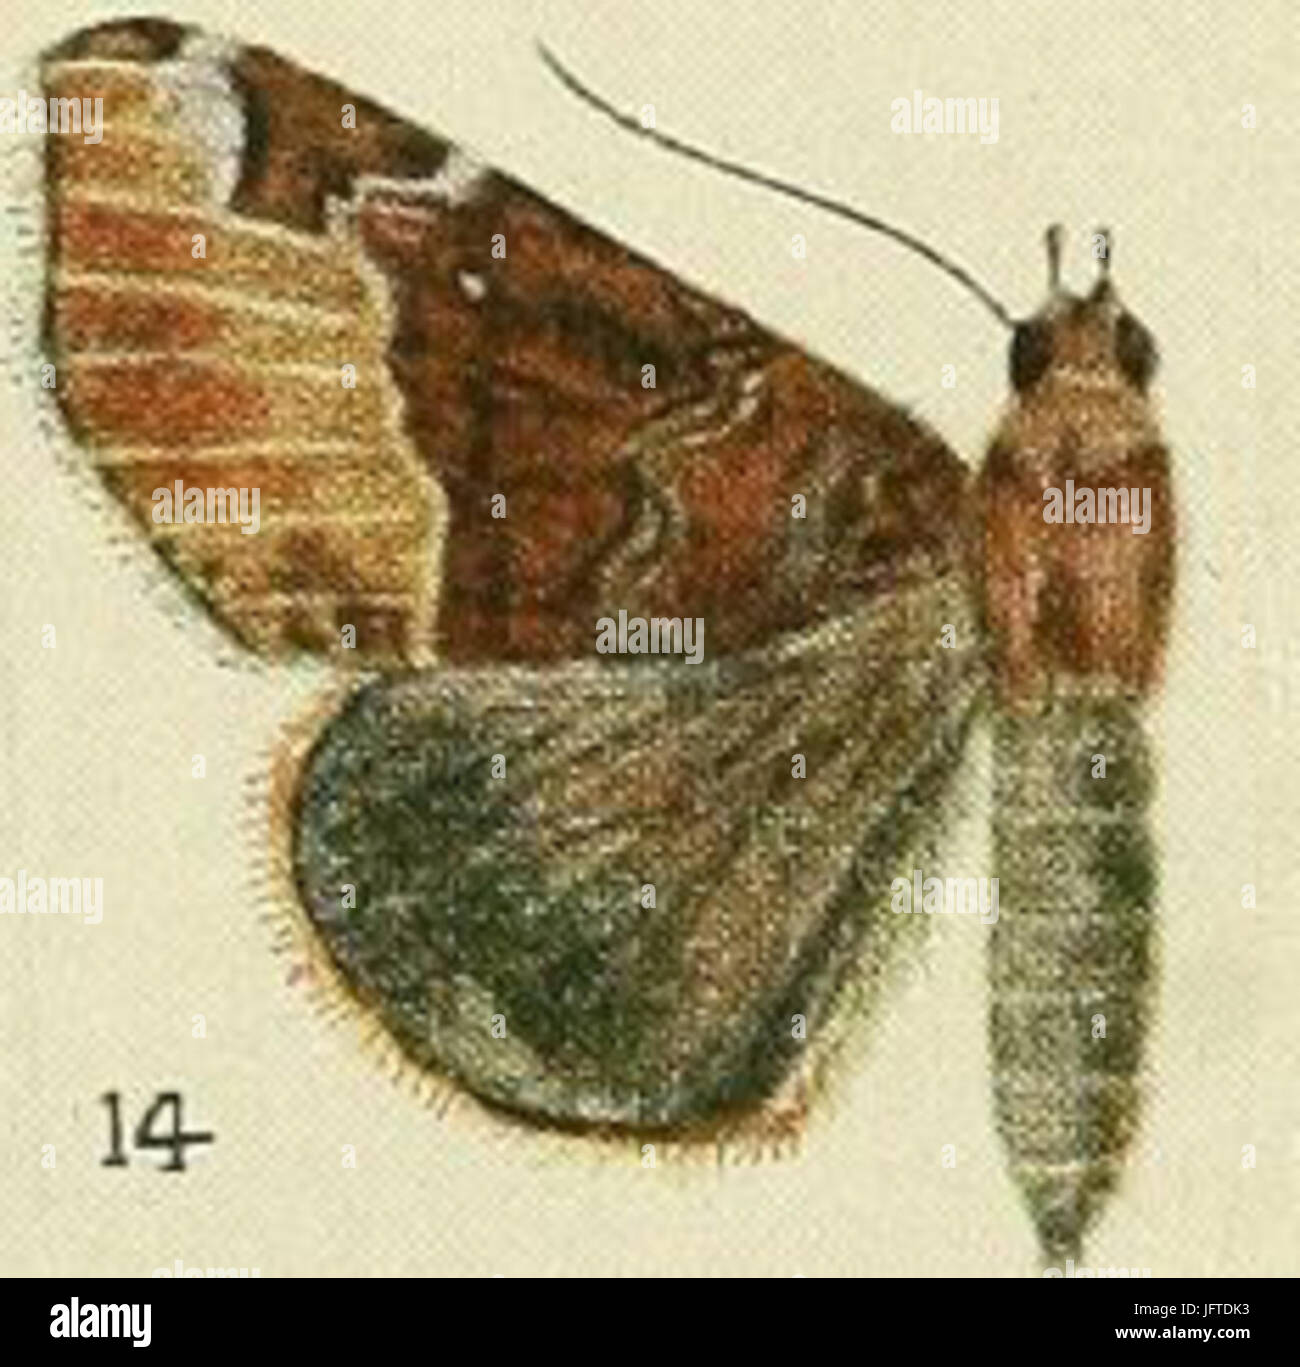 14-28Giria bubastis29 Giria pectinicornis 28Bethune-Baker 190929 Stock Photo